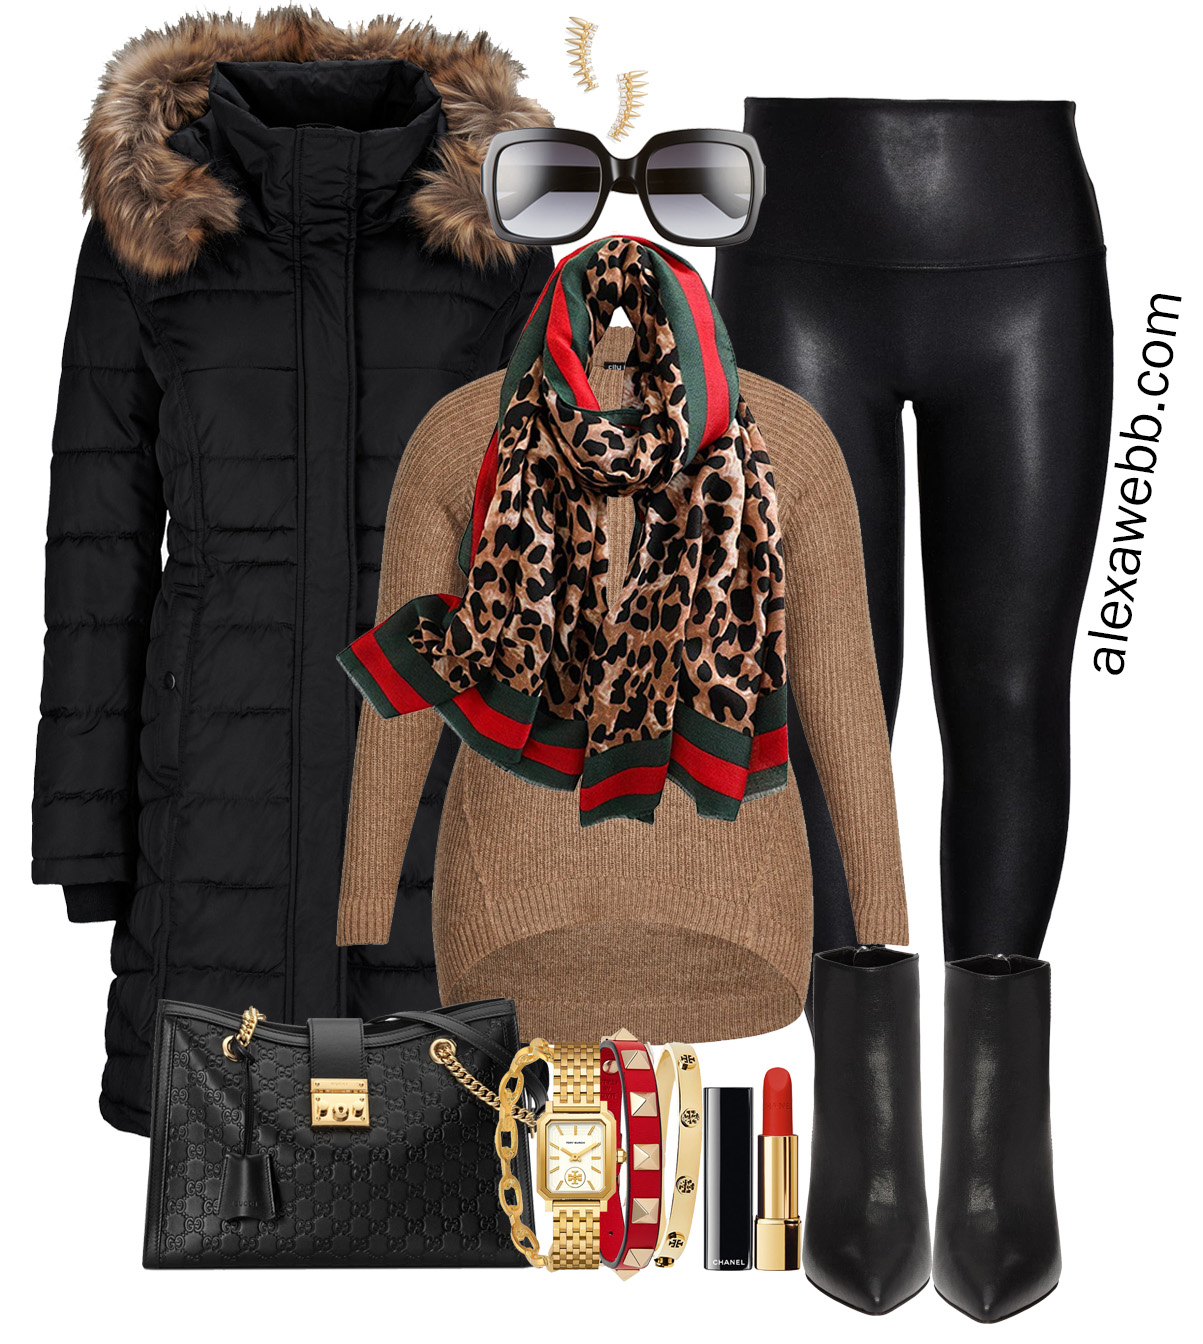 Black And Camel Outfit With A Leopard Scarf - une femme d'un certain âge